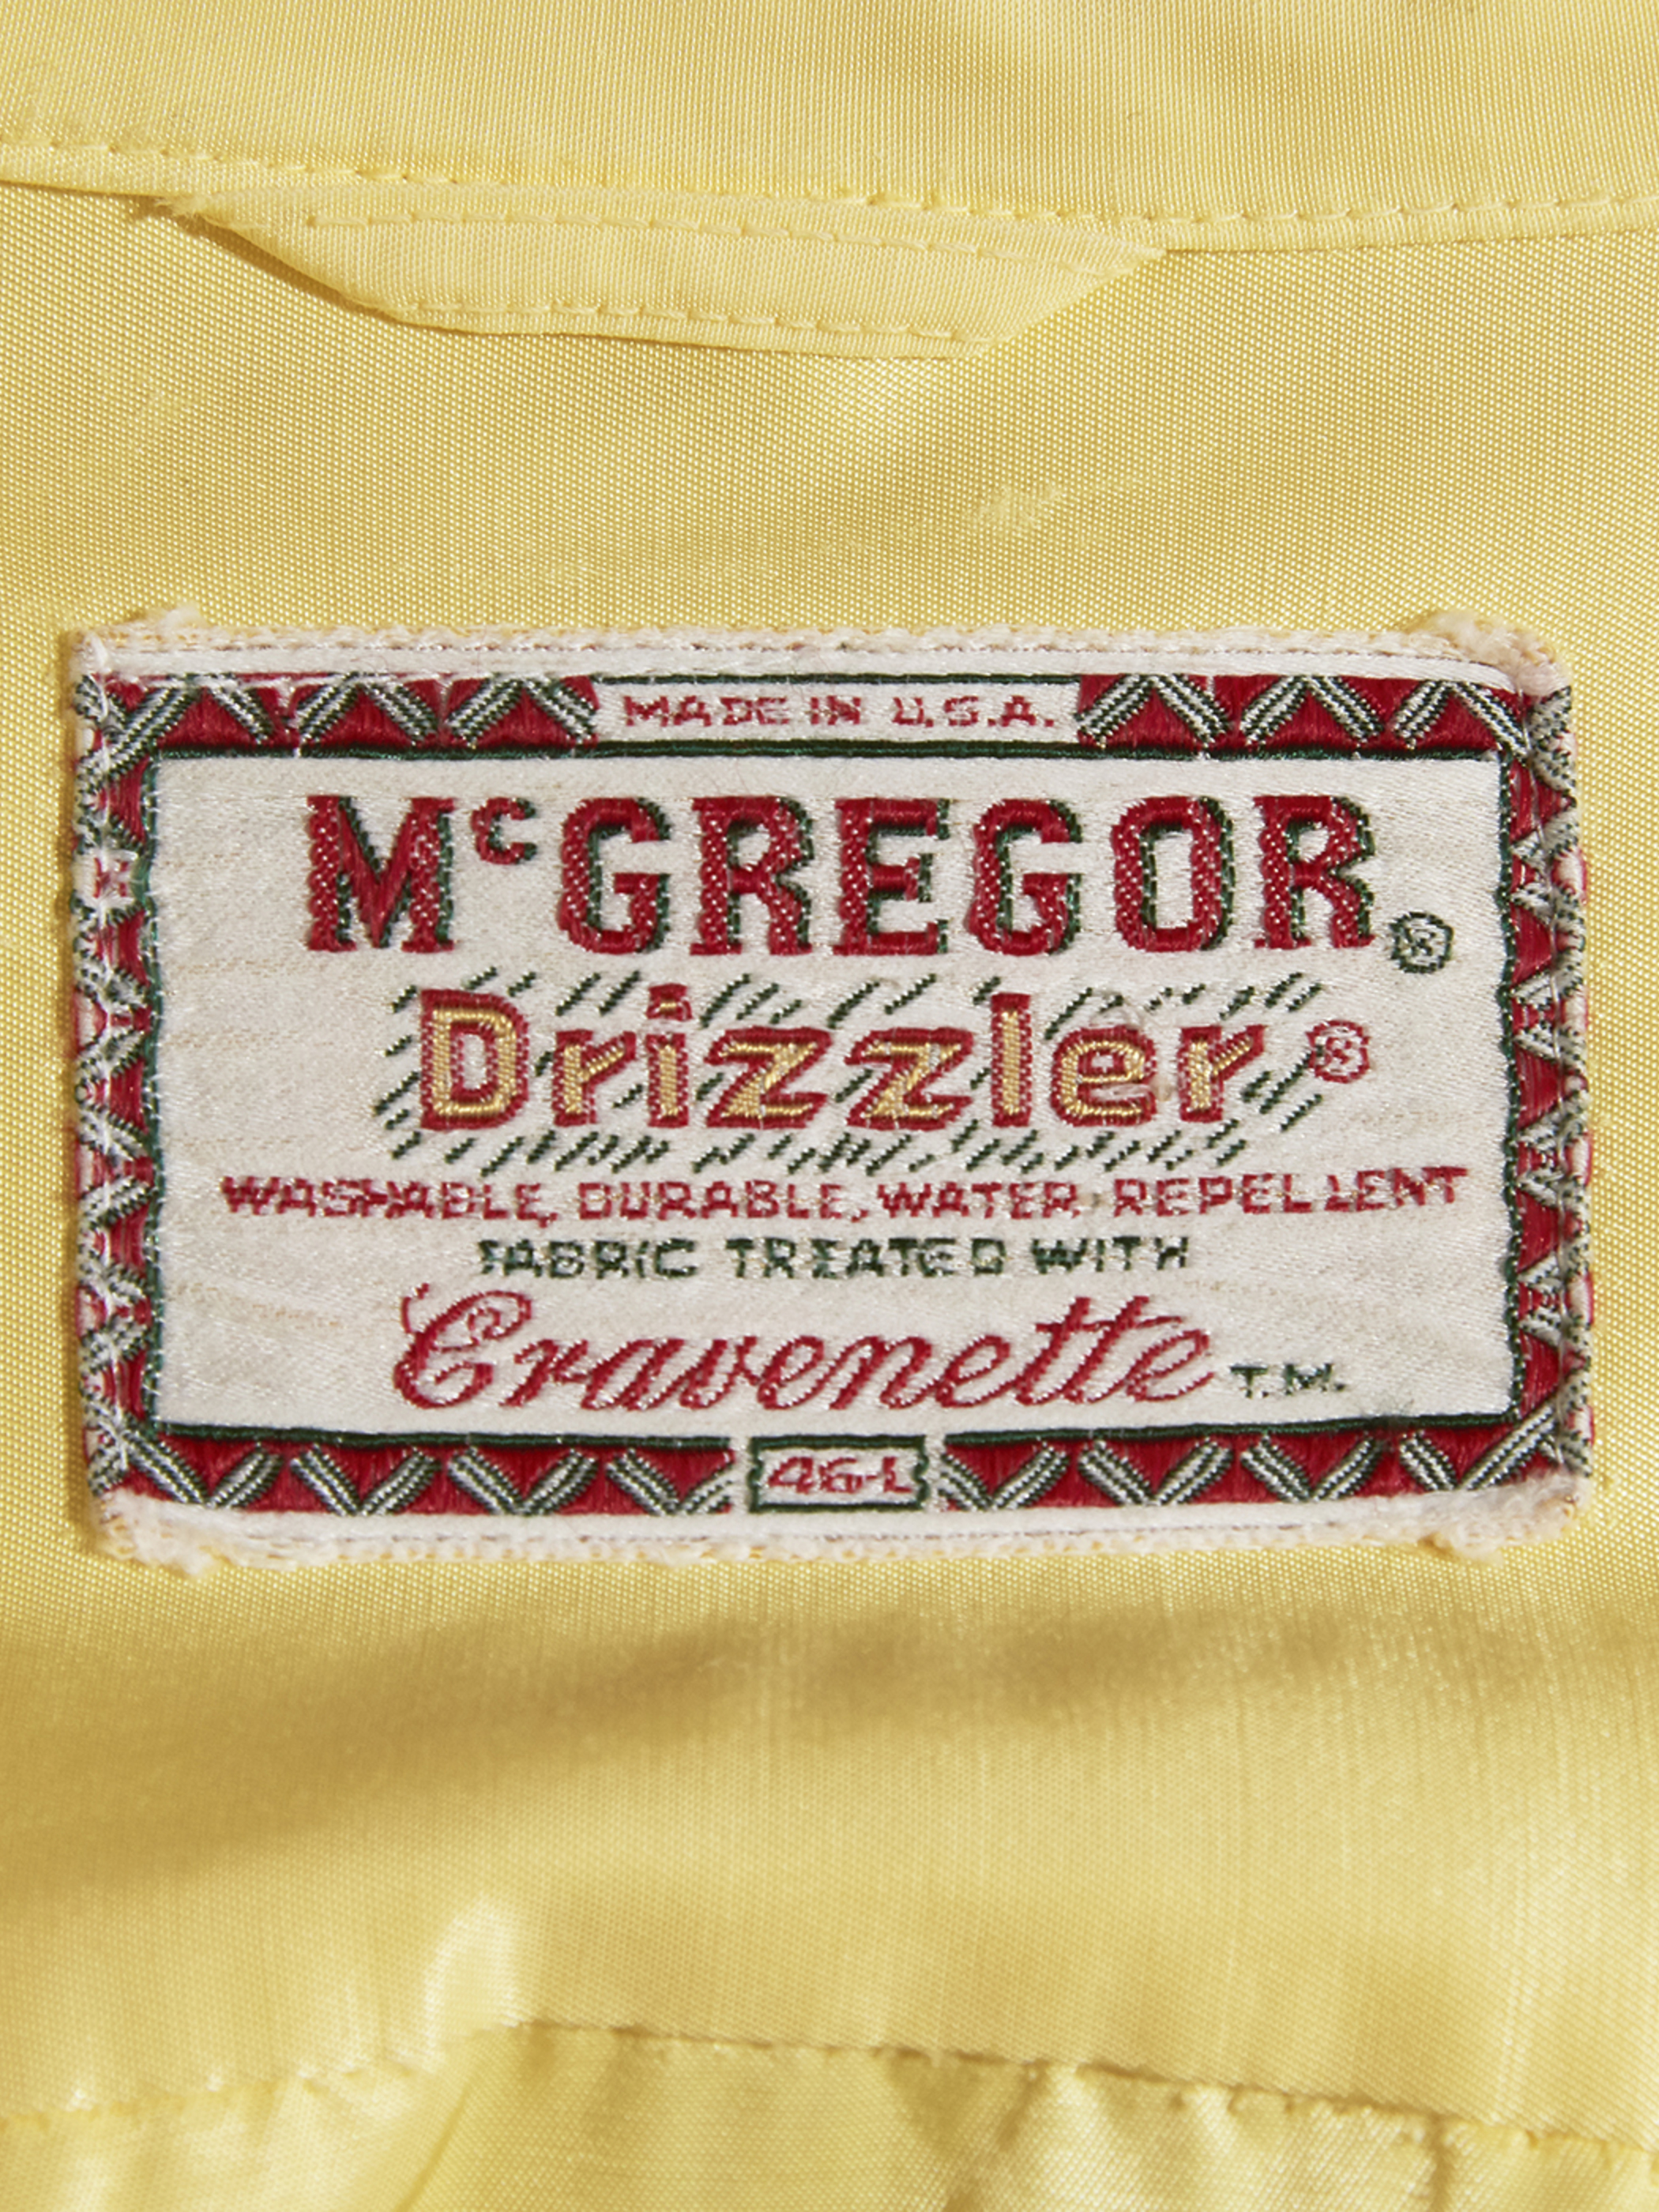 1960s "McGREGOR" drizzler jacket -LEMON YELLOW-